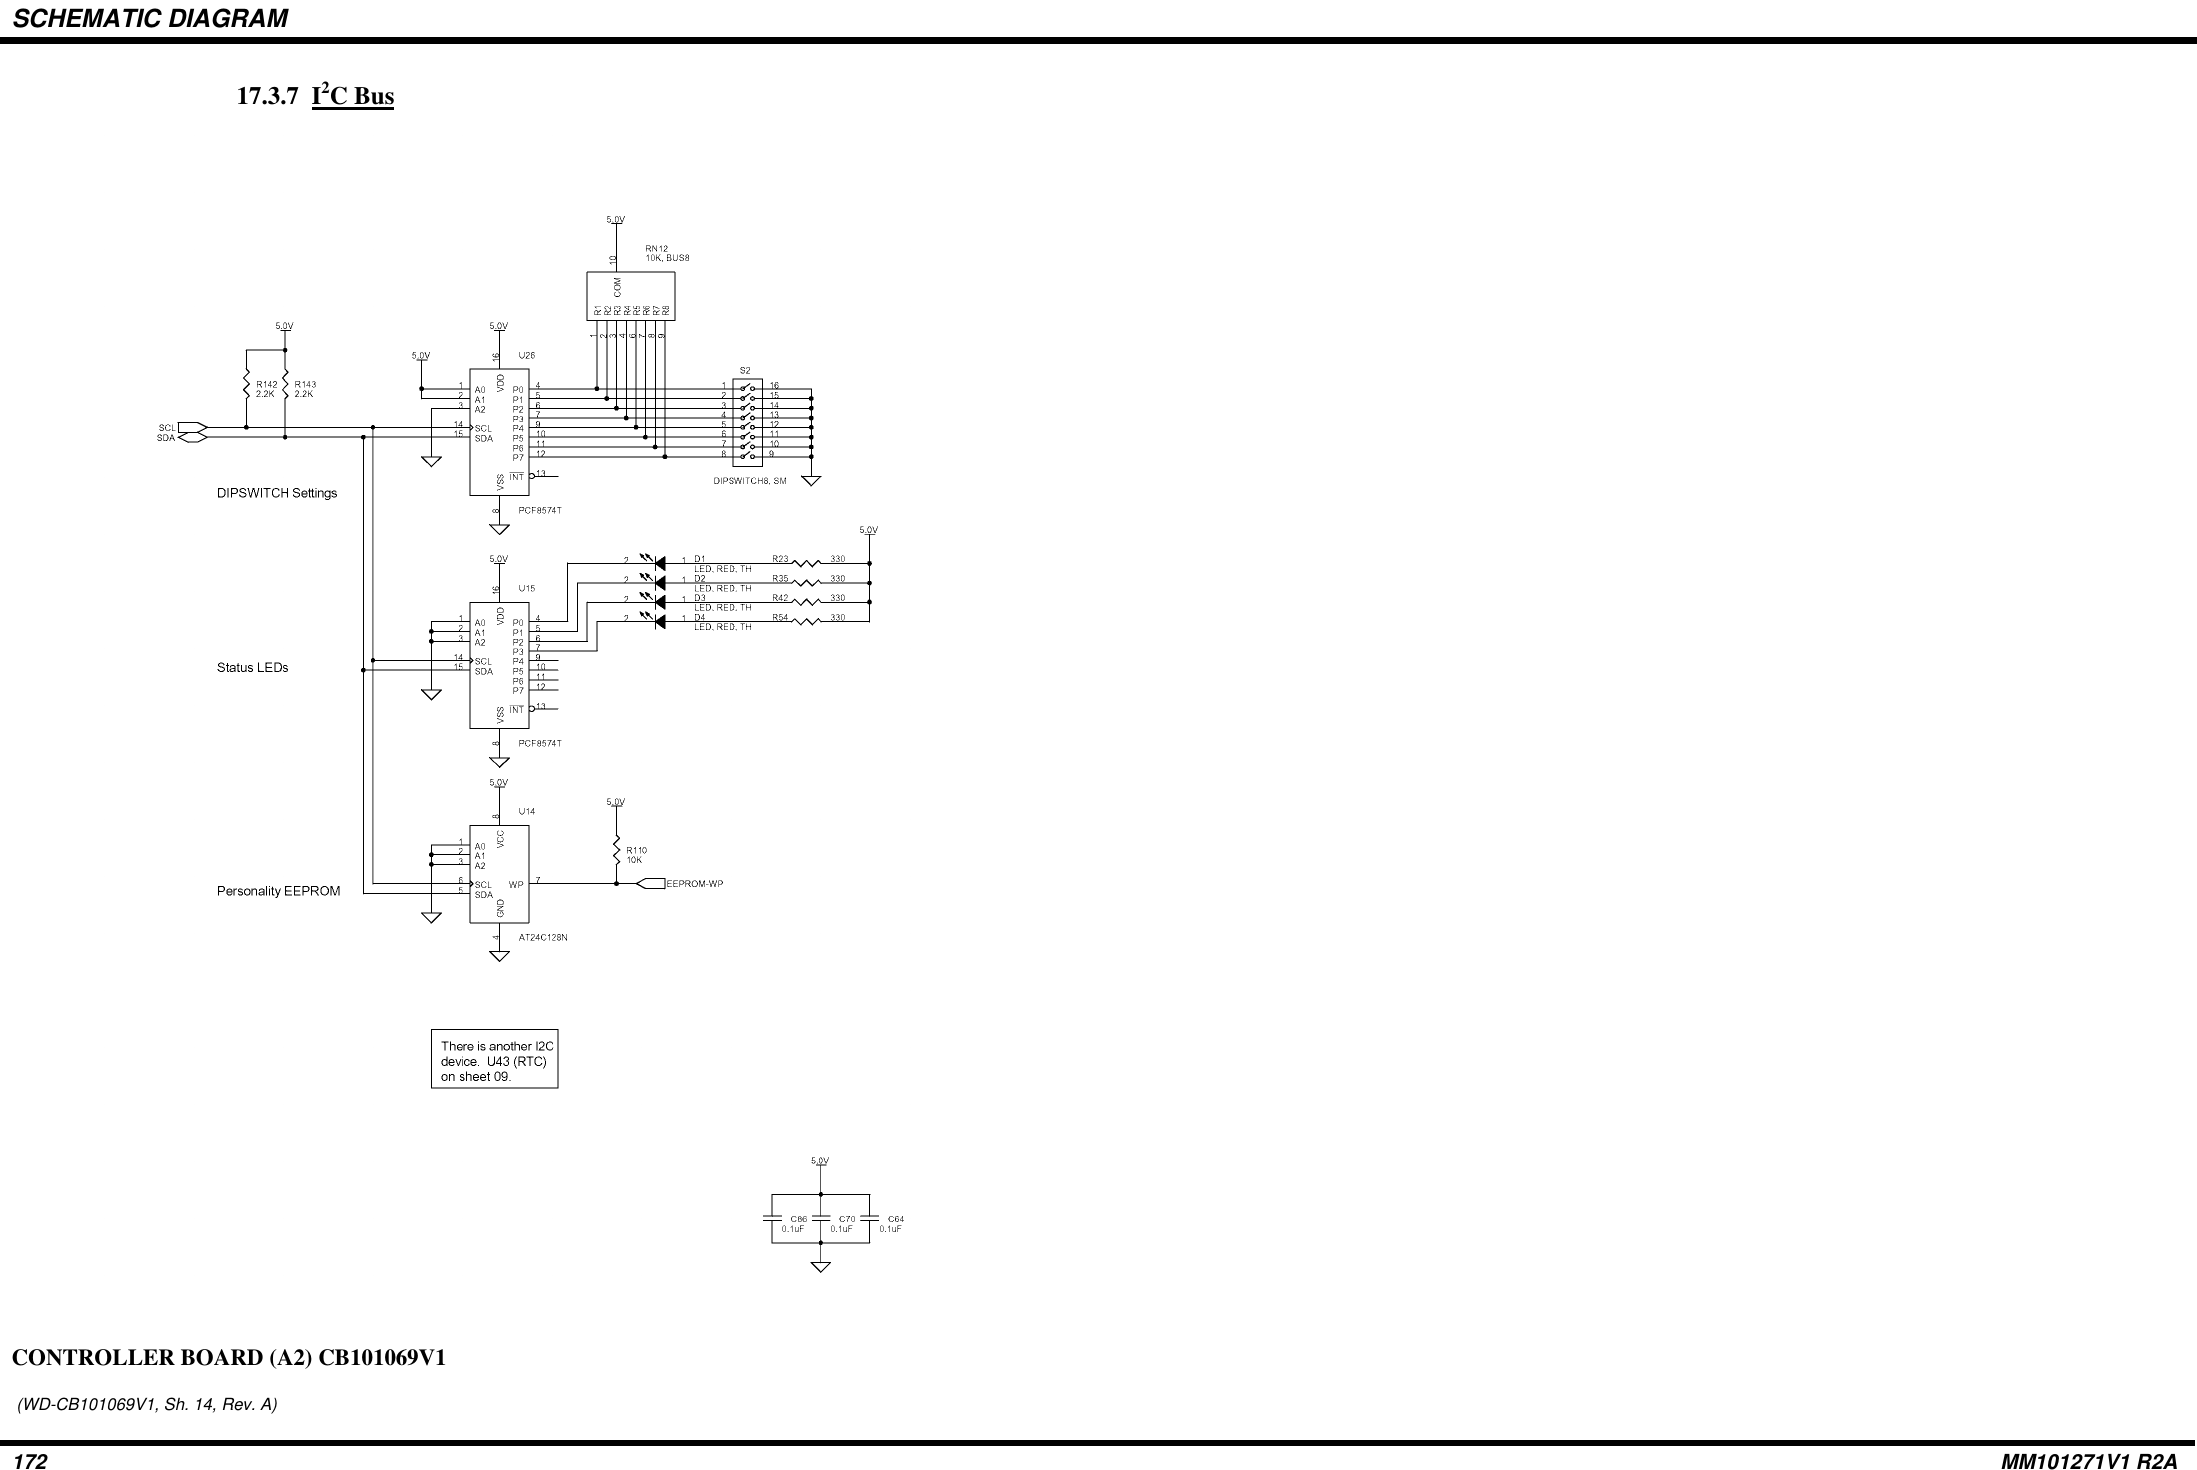 SCHEMATIC DIAGRAM172 MM101271V1 R2A17.3.7 I2C BusCONTROLLER BOARD (A2) CB101069V1 (WD-CB101069V1, Sh. 14, Rev. A)